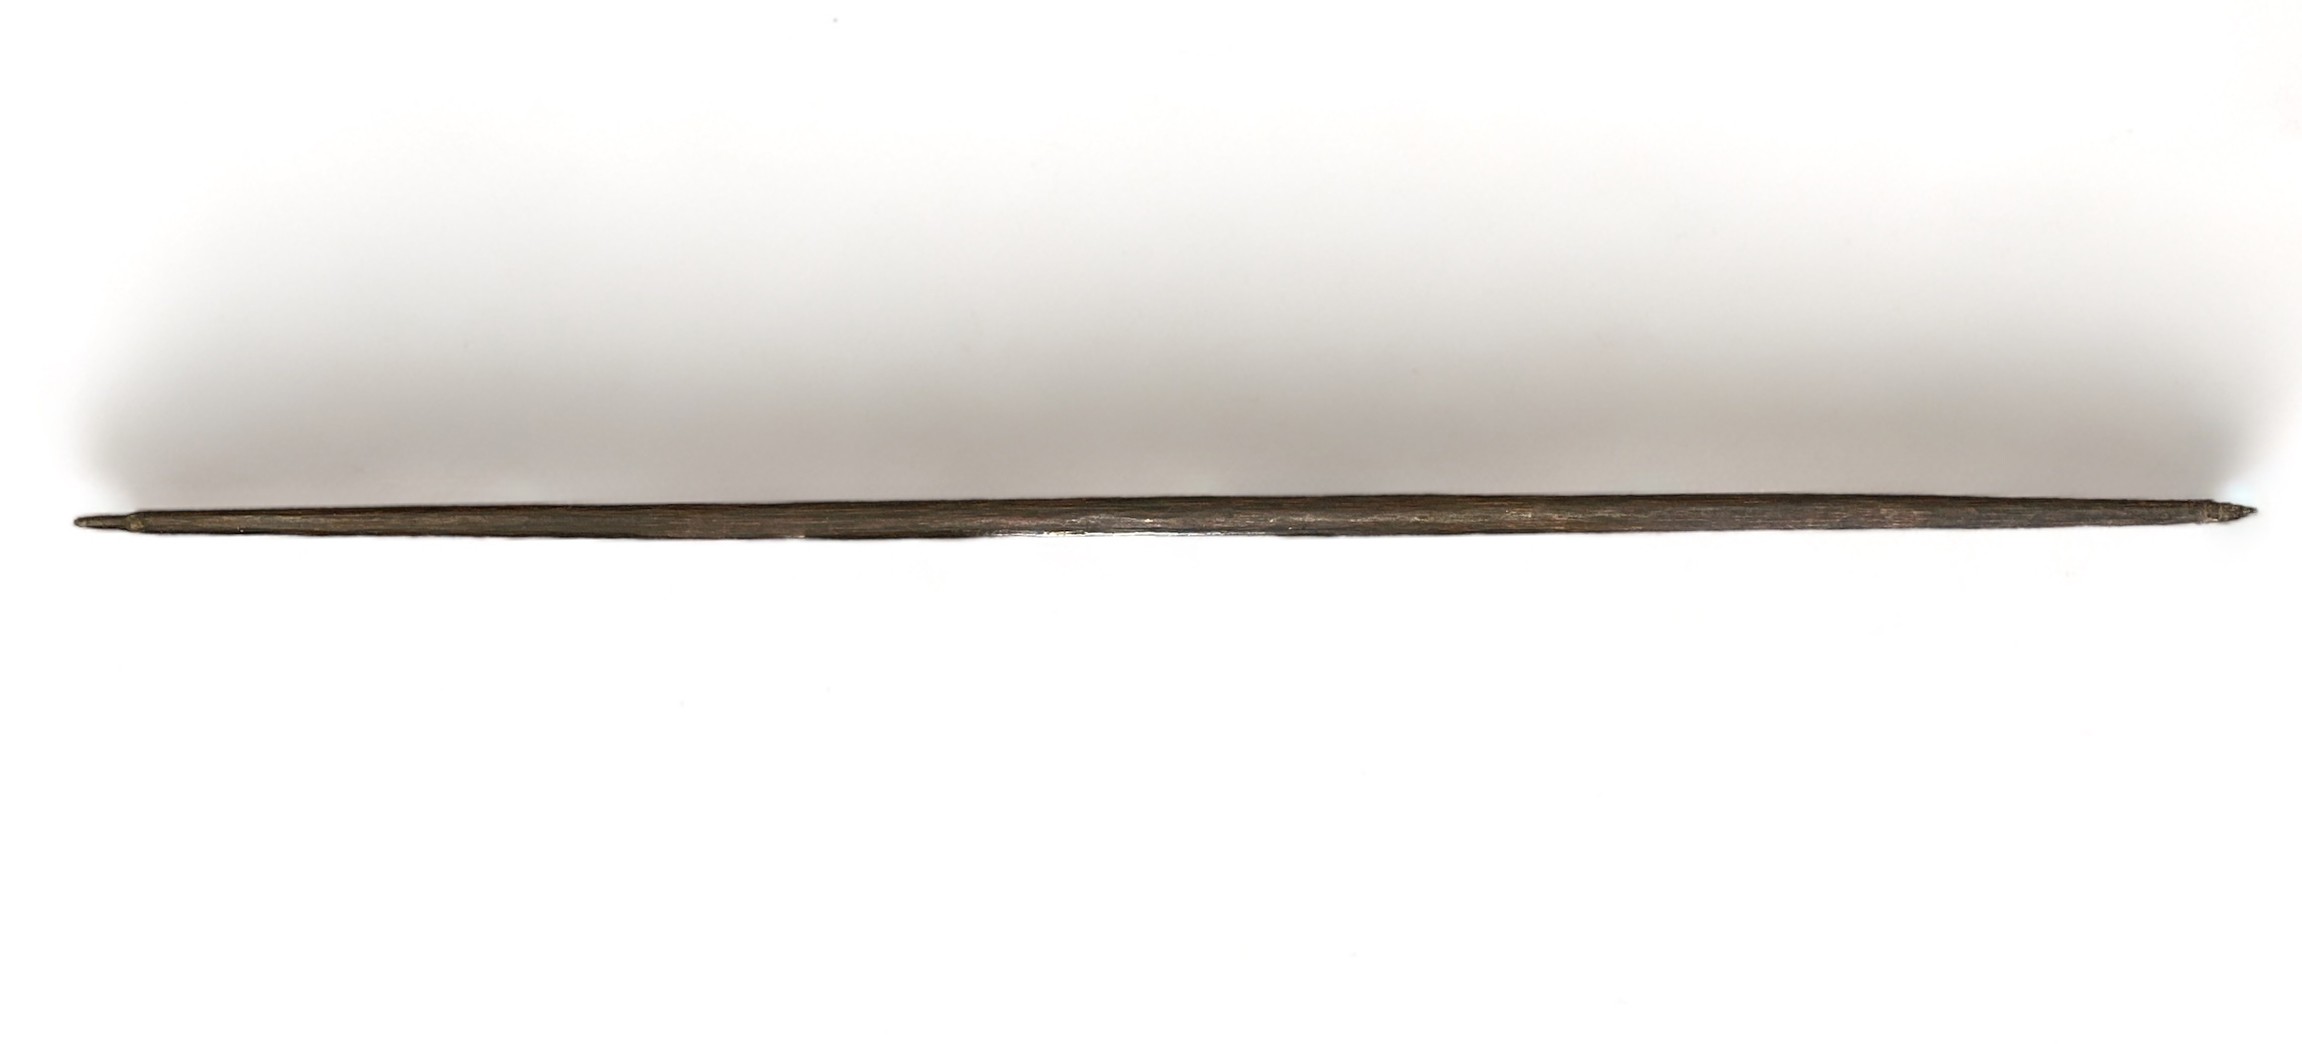 19th Century hand carved Aboriginal Bow, length 136 cm